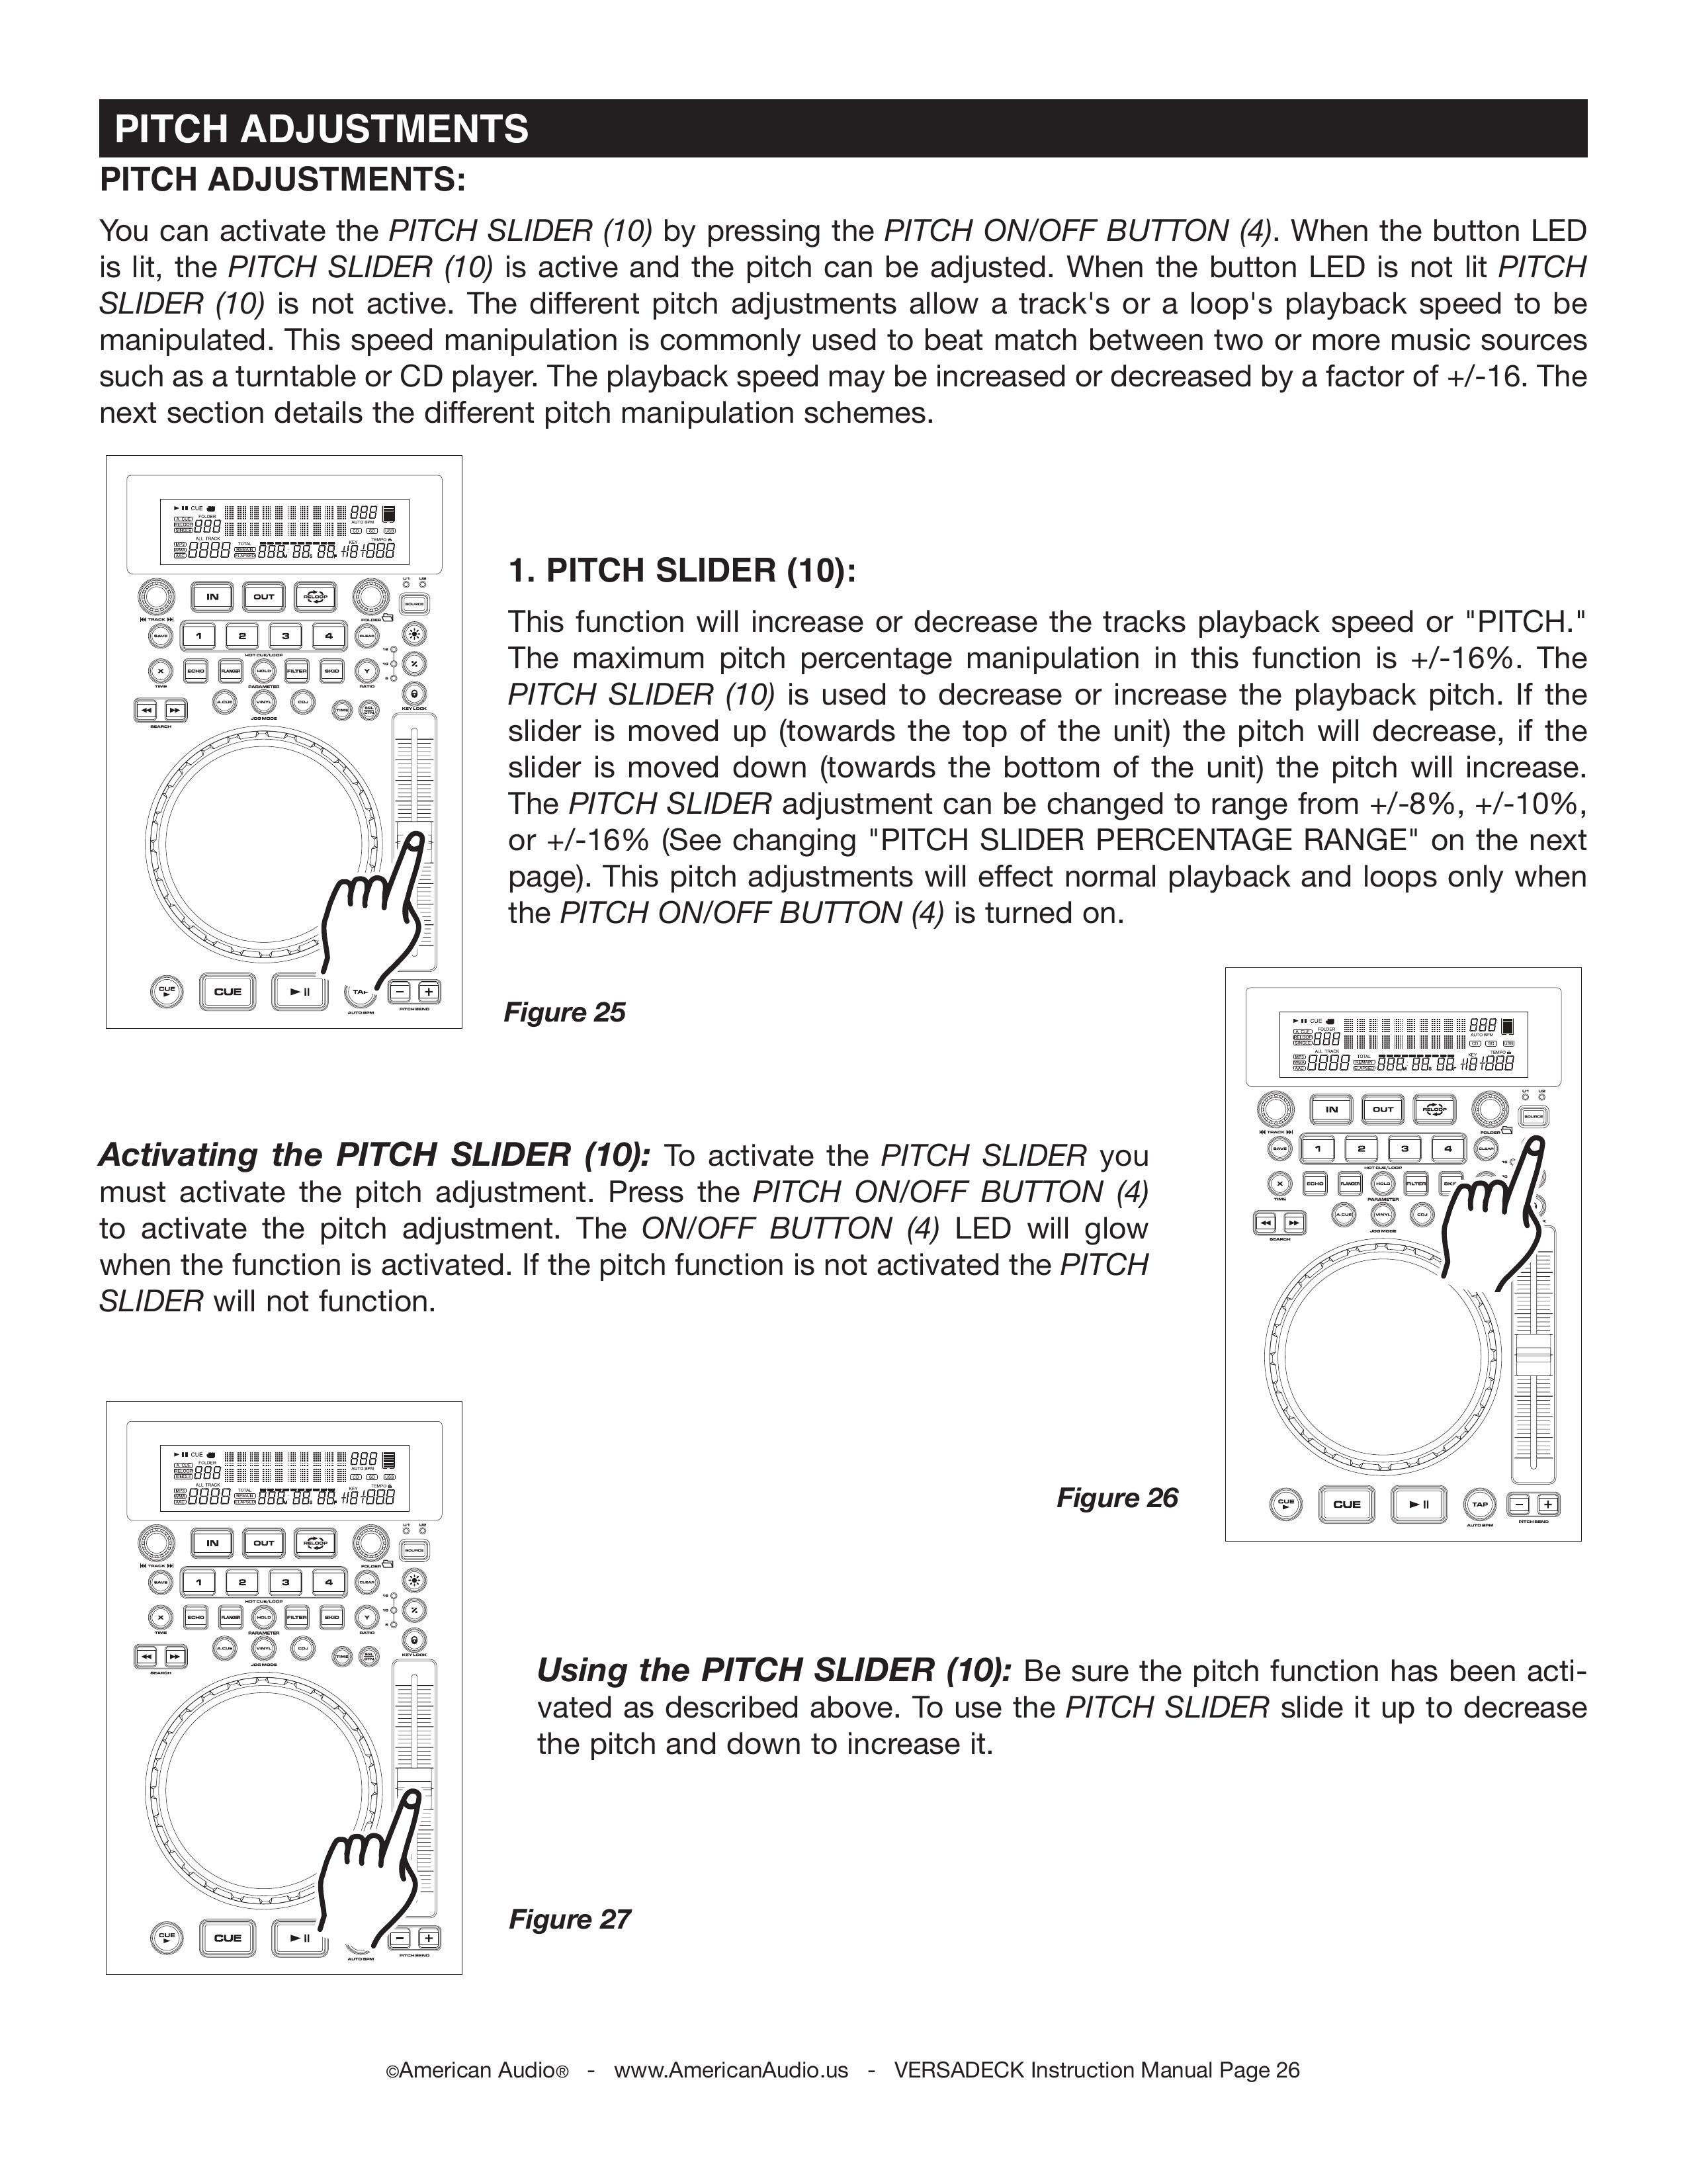 American Audio Versadeck DJ Equipment User Manual (Page 26)